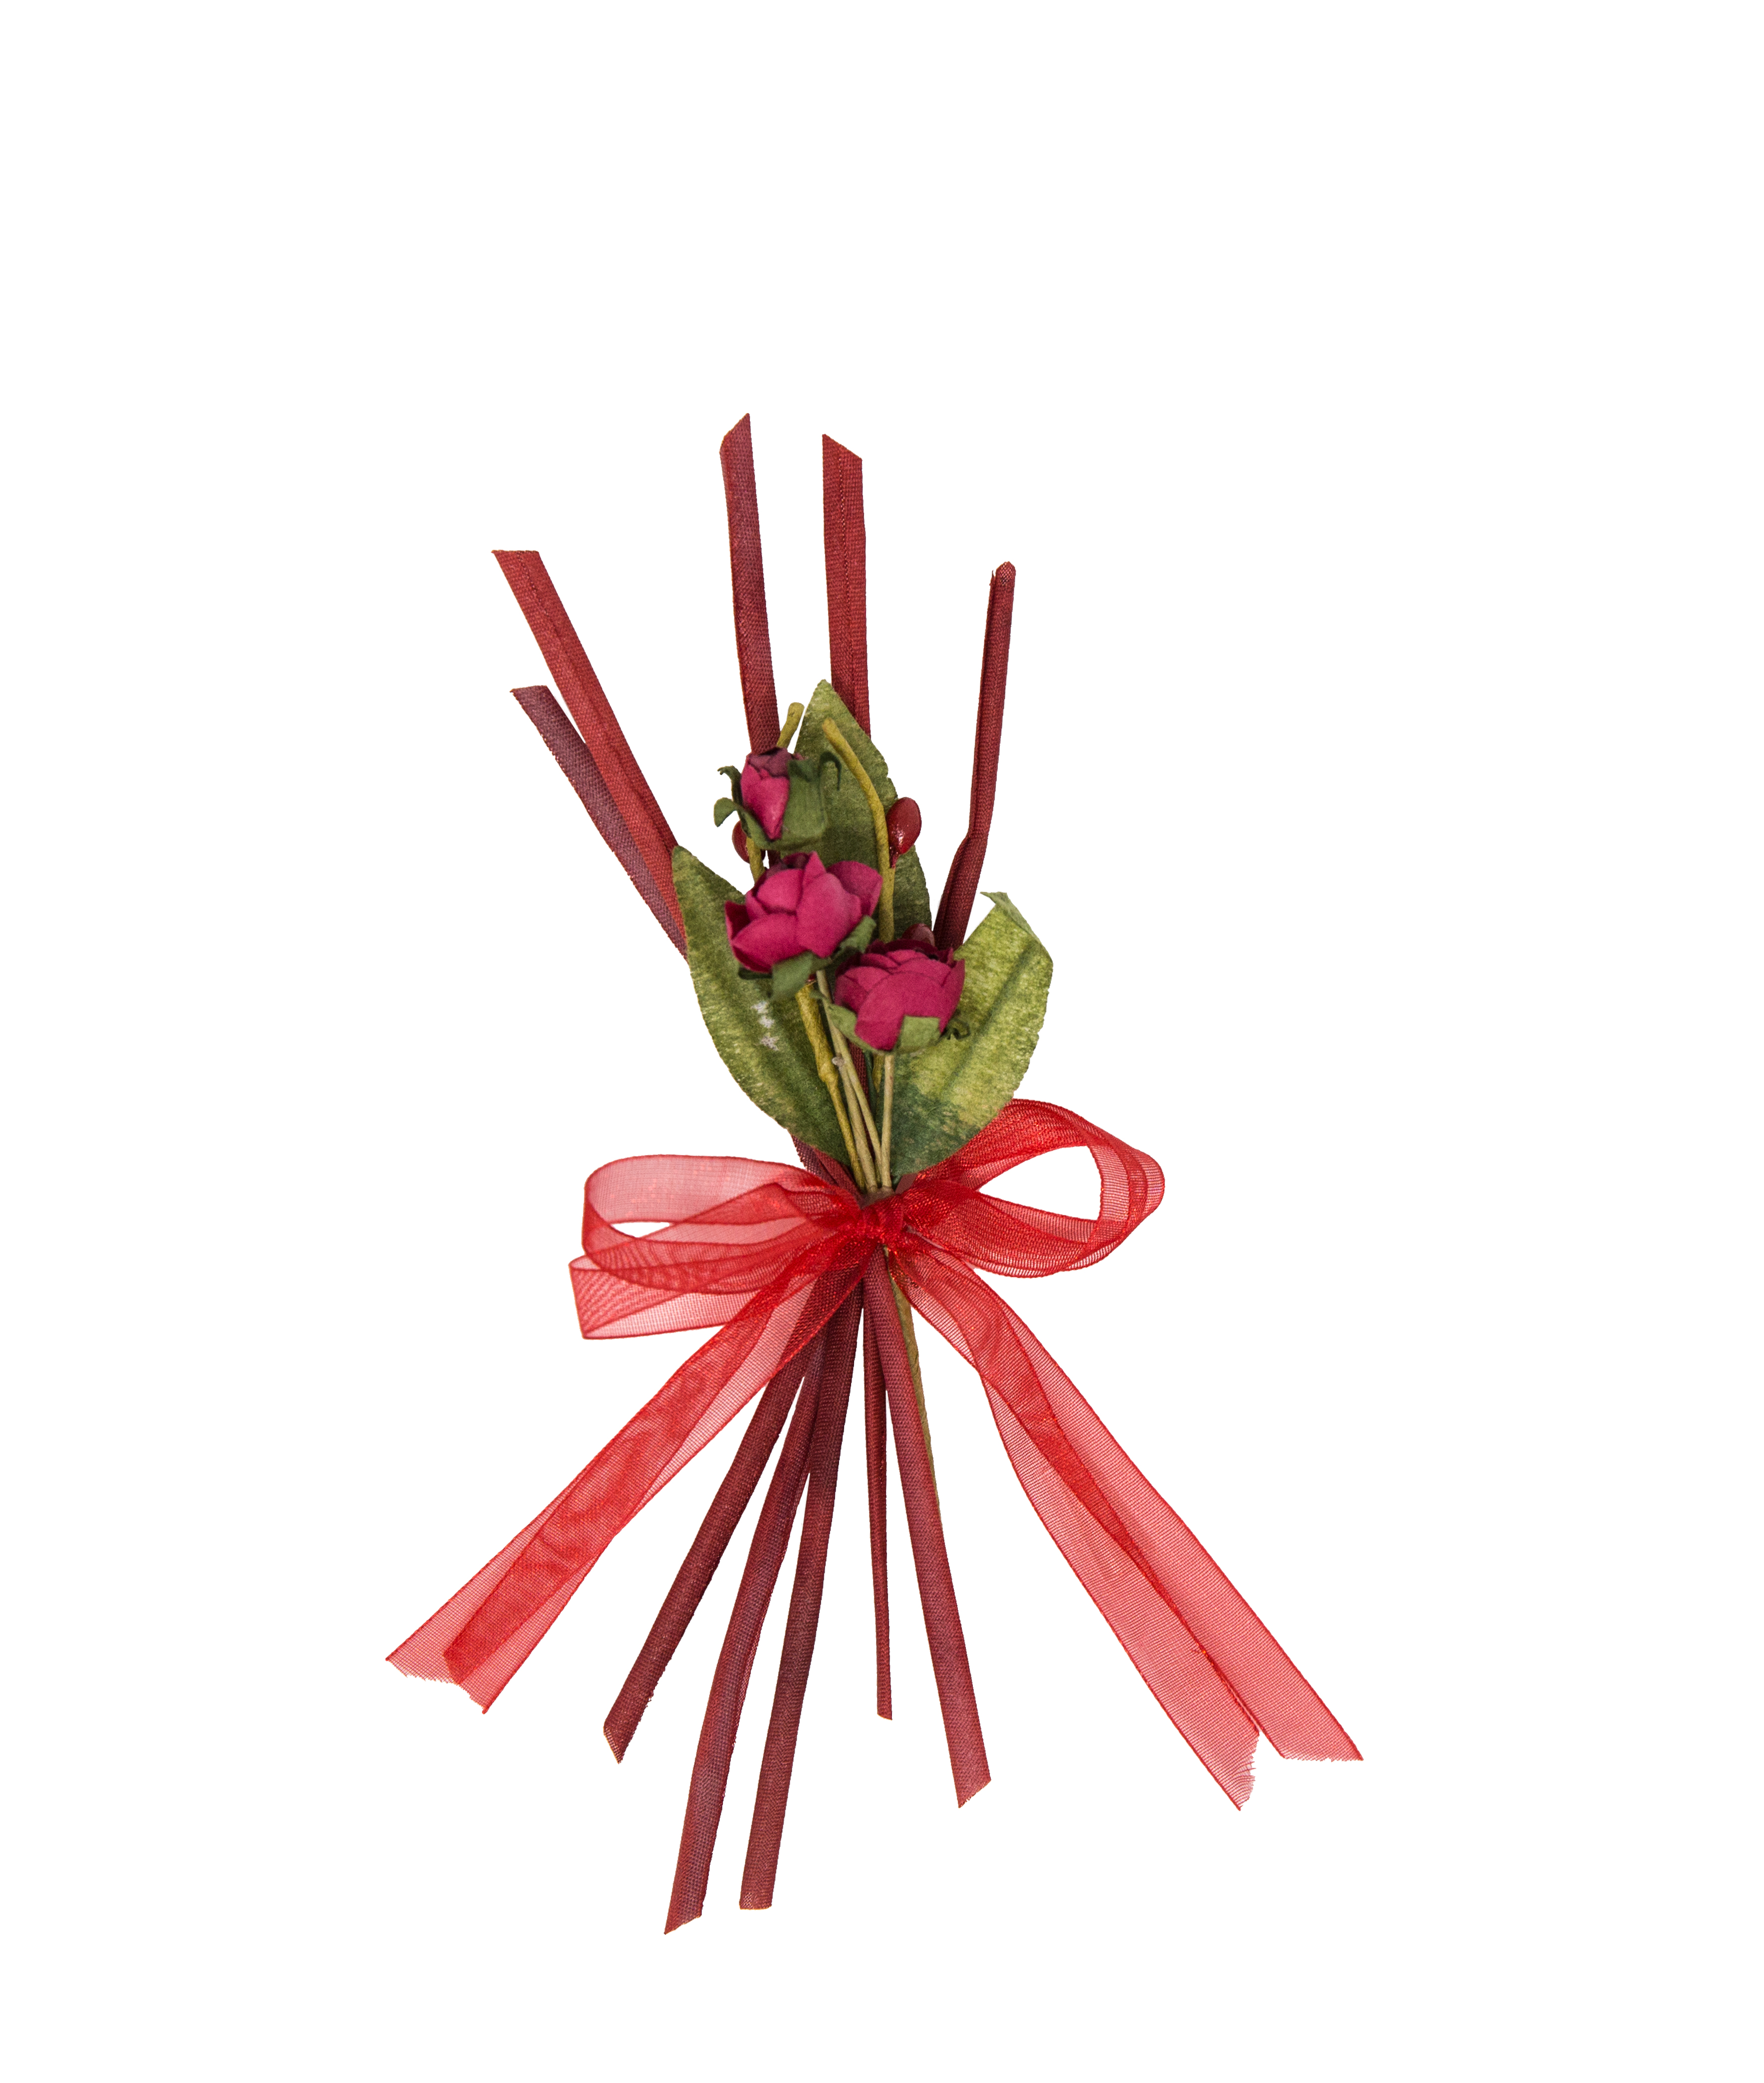 Gästeanstecker Schleife Blume Blatt rot 15cm ohne Anstecknadel